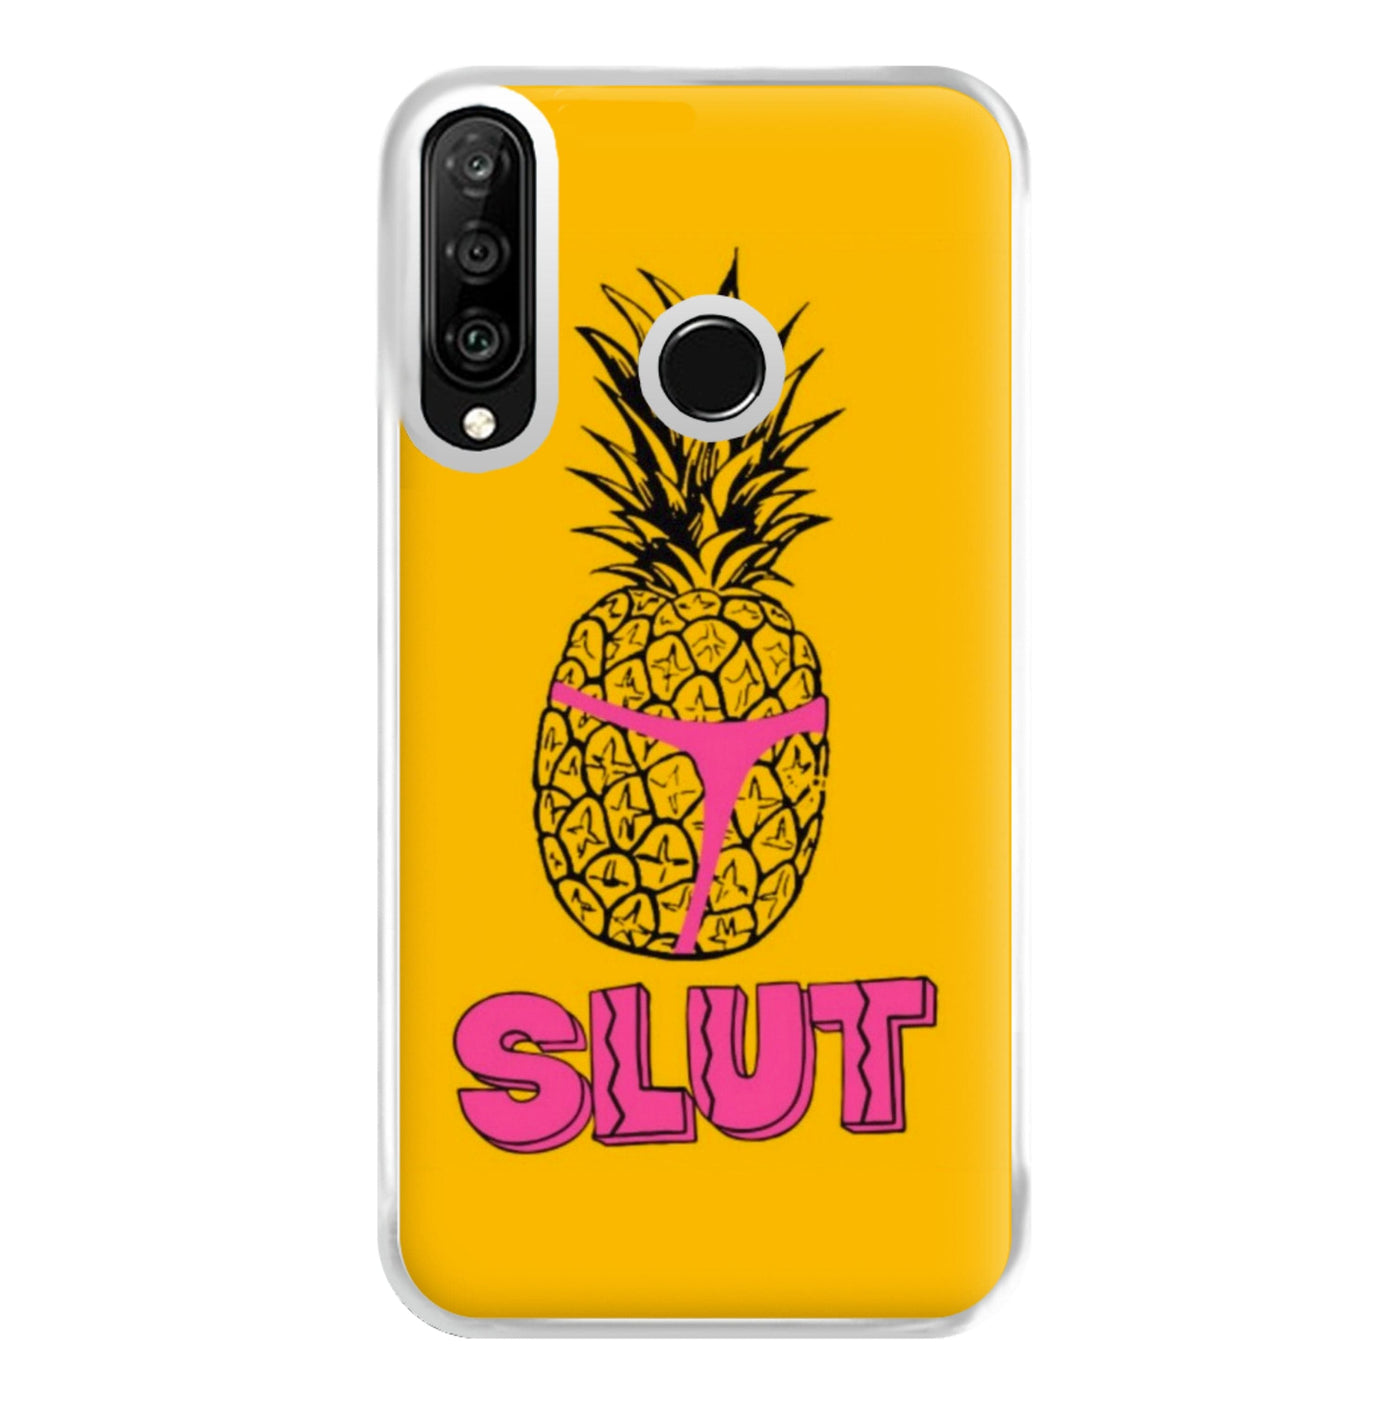 Holt's Pineapple Shirt Design - Brooklyn Nine-Nine Phone Case